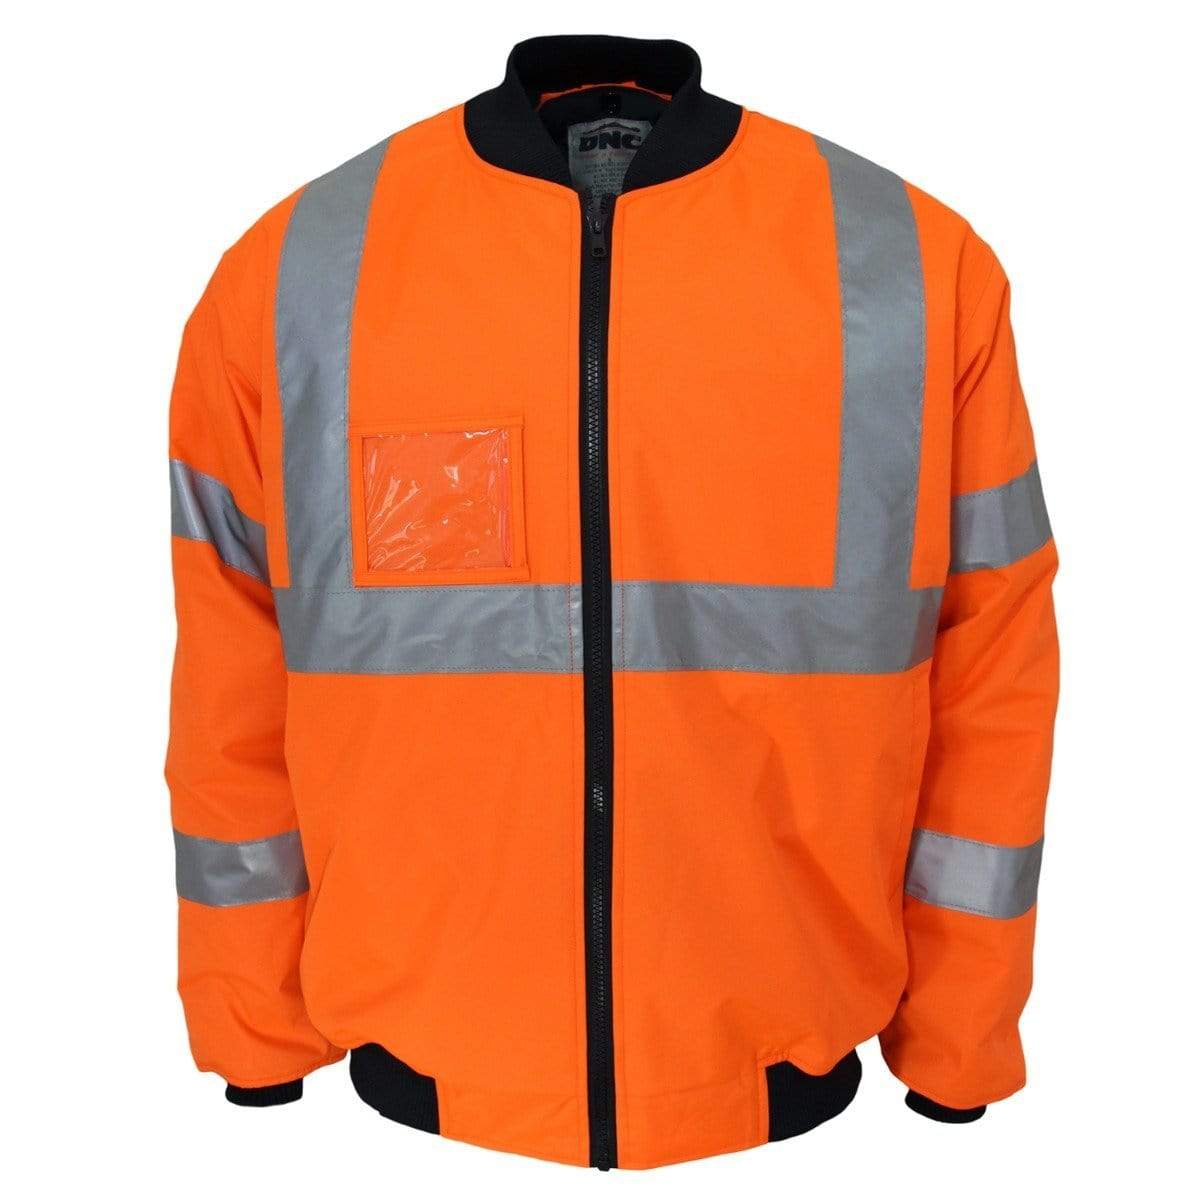 Dnc Workwear Hi-vis "X" Back 6-in-1 Rain Jacket Bio-motion Tape - 3763 Work Wear DNC Workwear Orange XS 